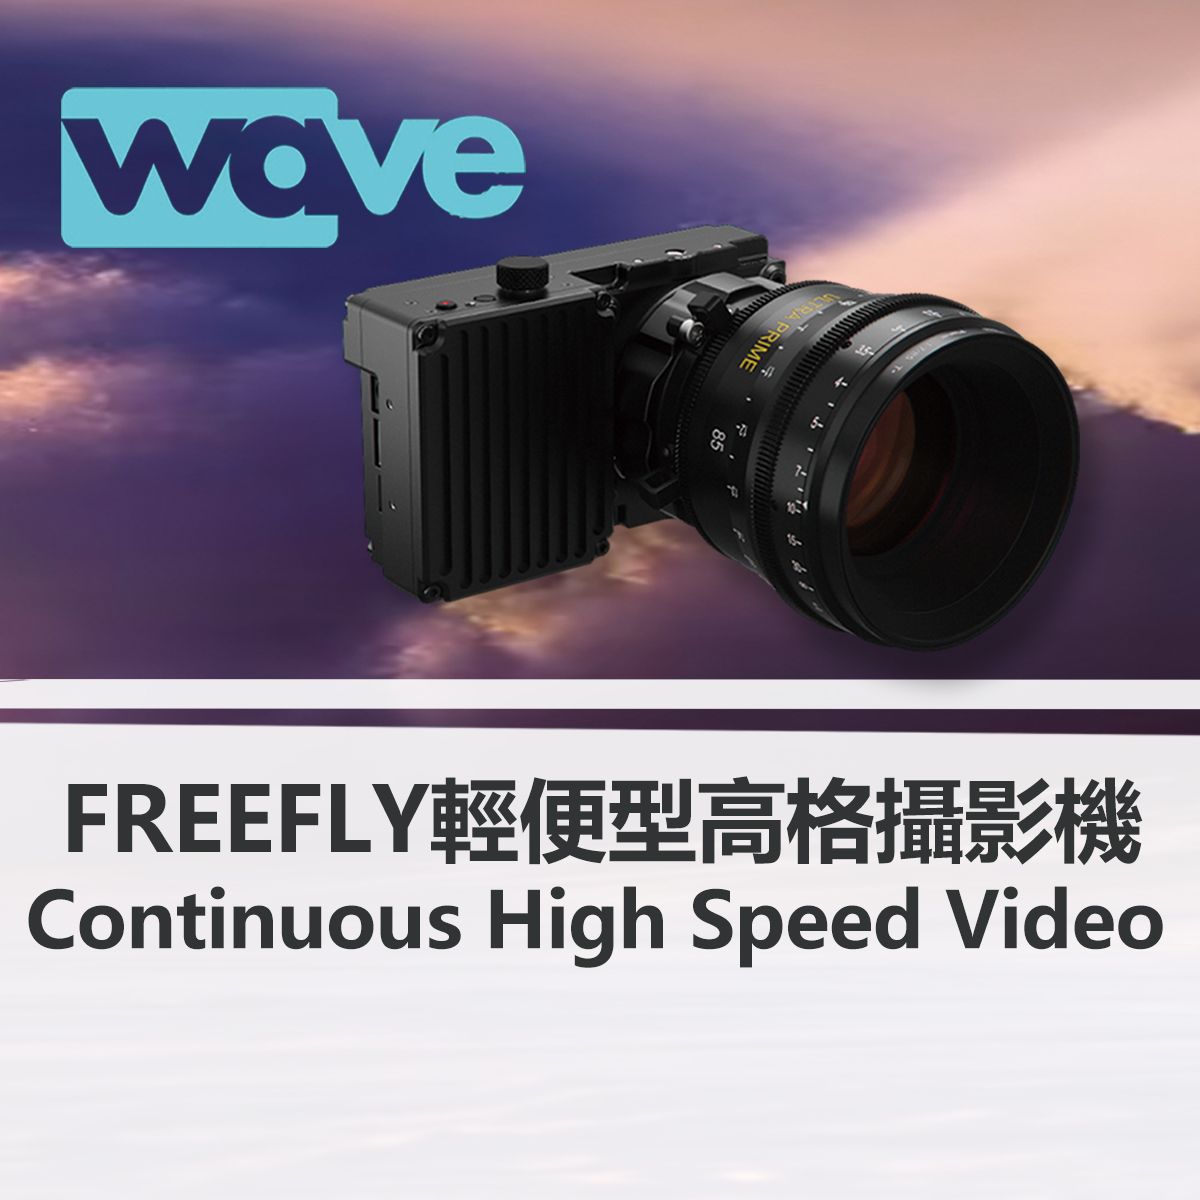 WAVE FREEFLY 輕便型高格攝影機